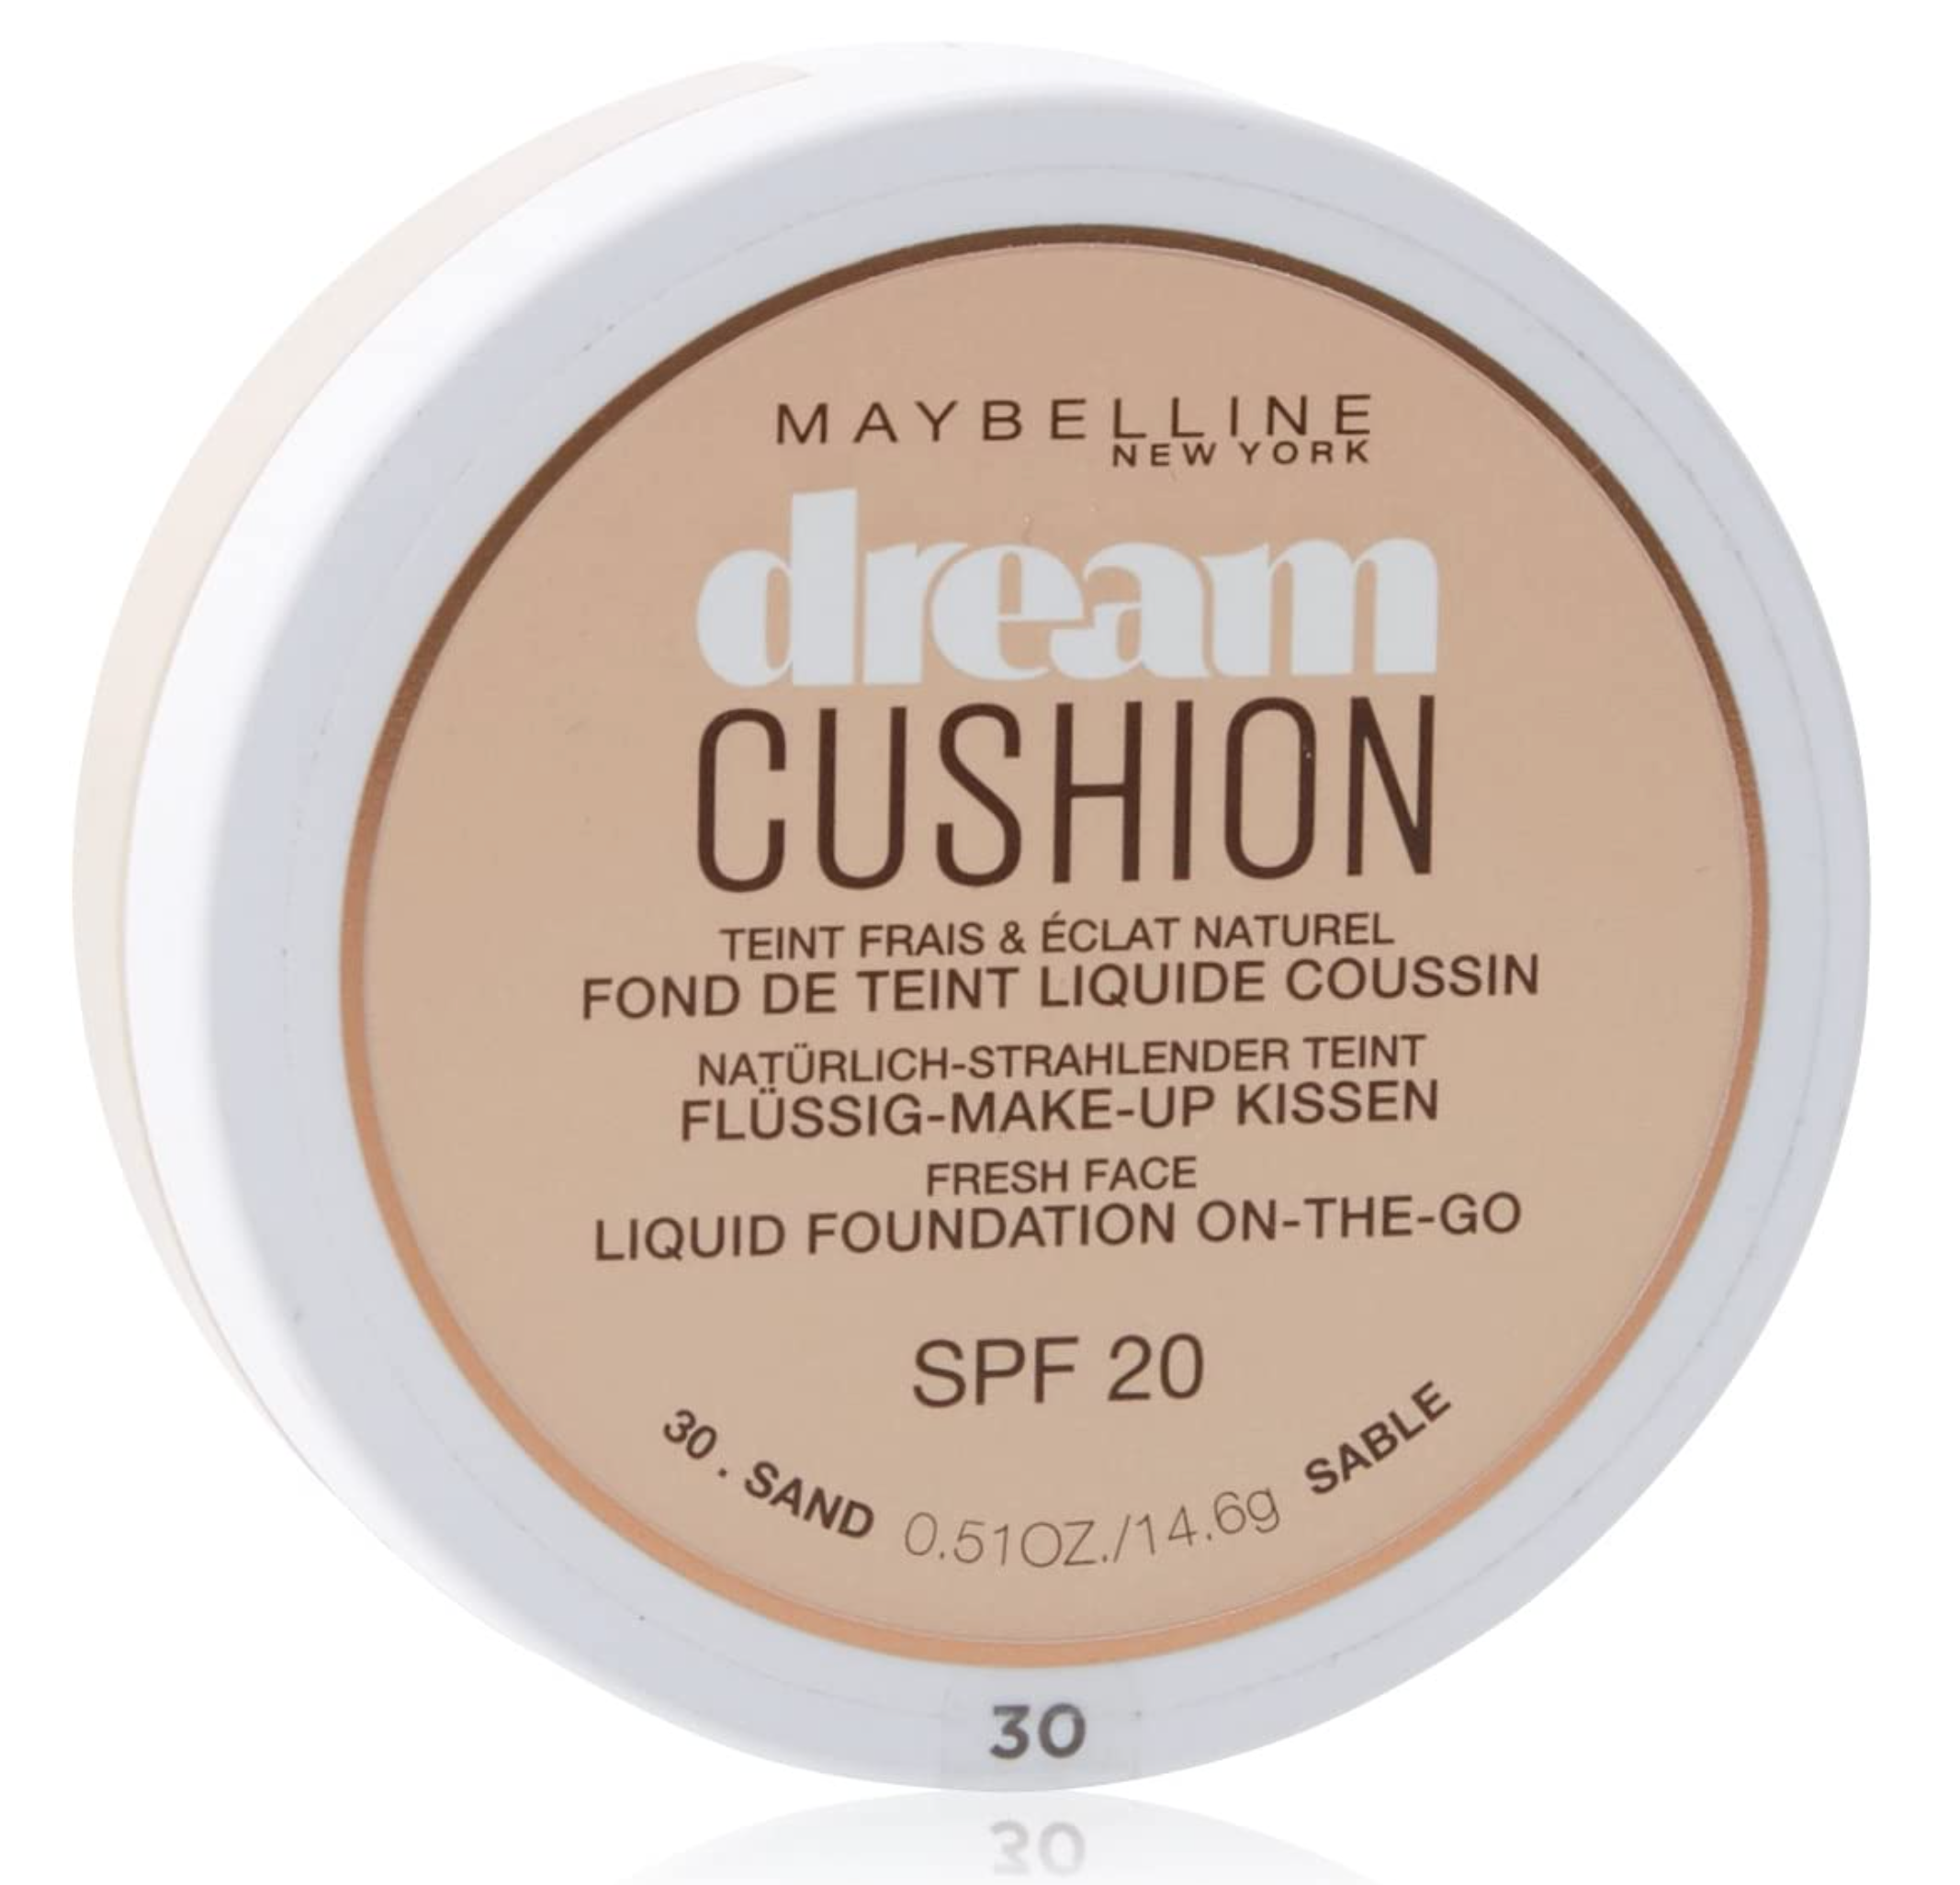 Maybelline Dream Cushion Liquid Foundation - 30 Sand